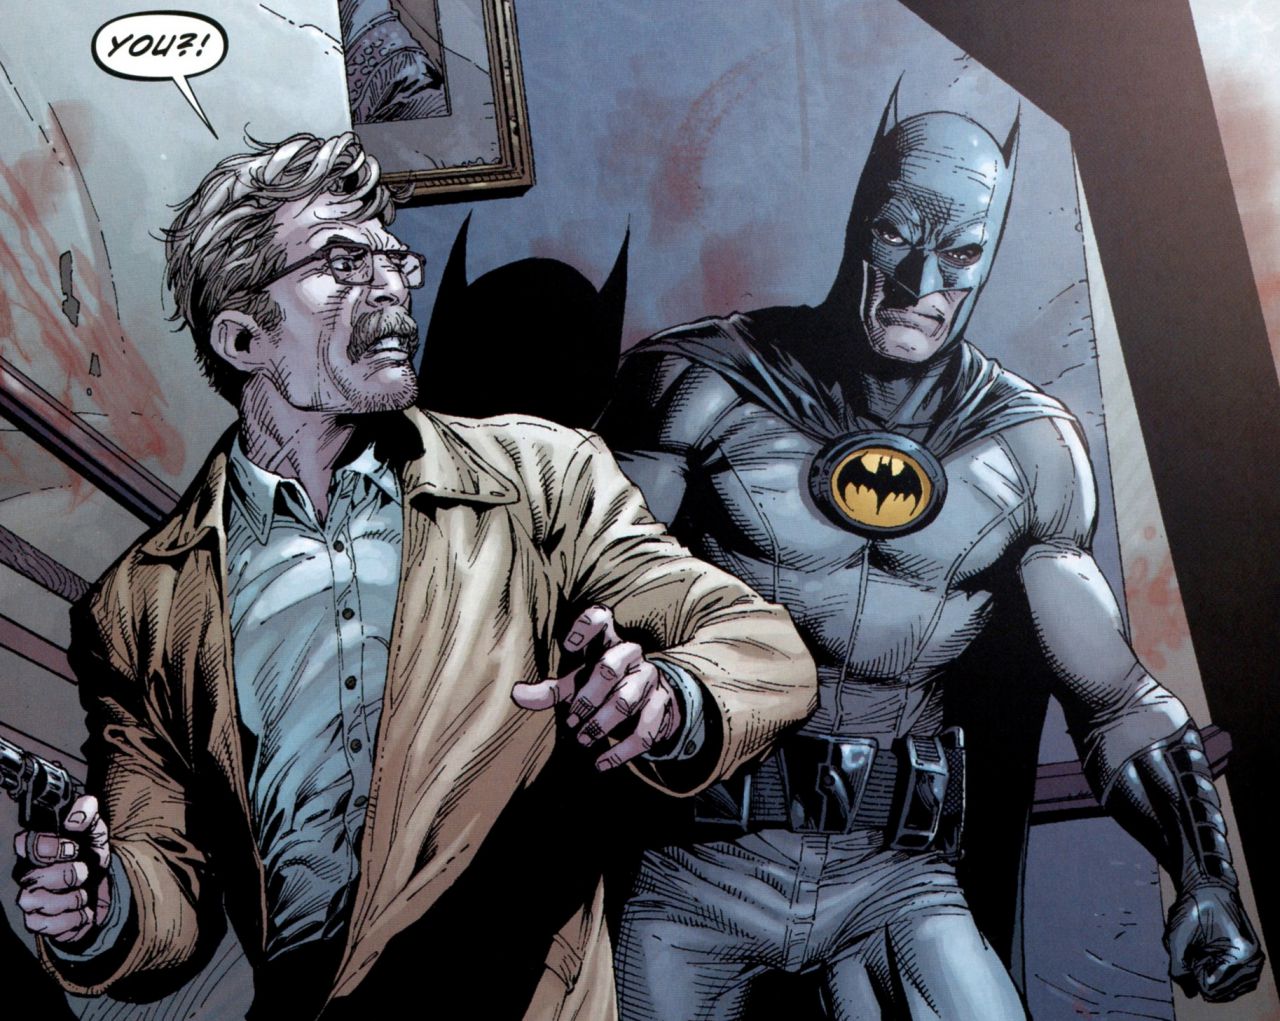 Commissioner Gordon and Batman